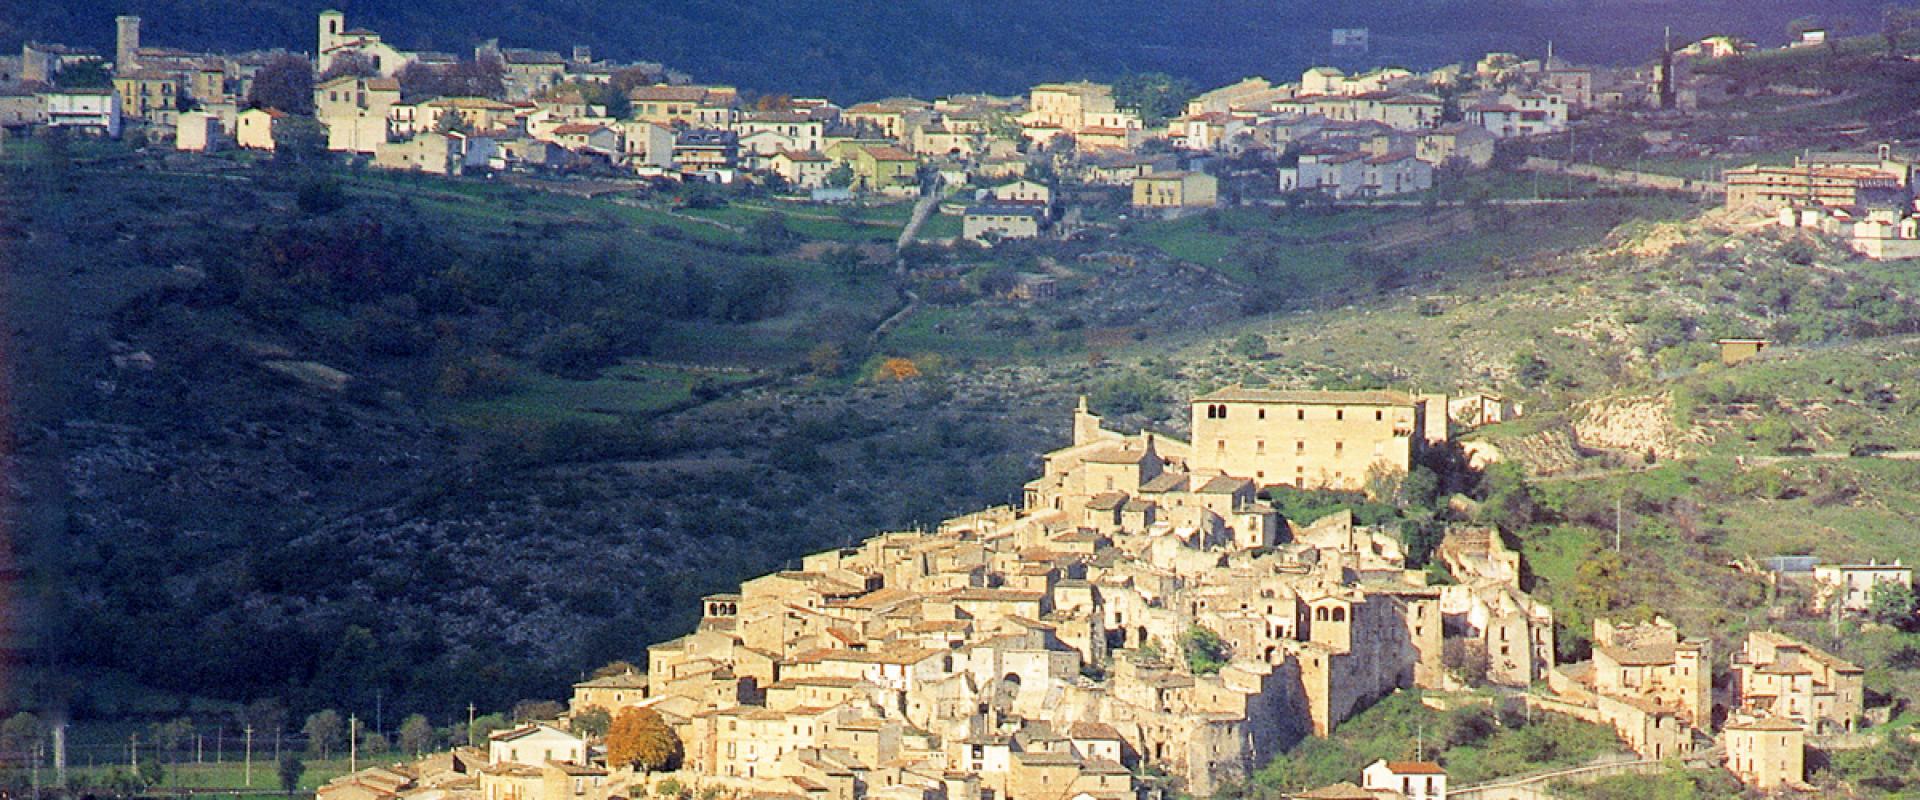 Navelli  Abruzzo